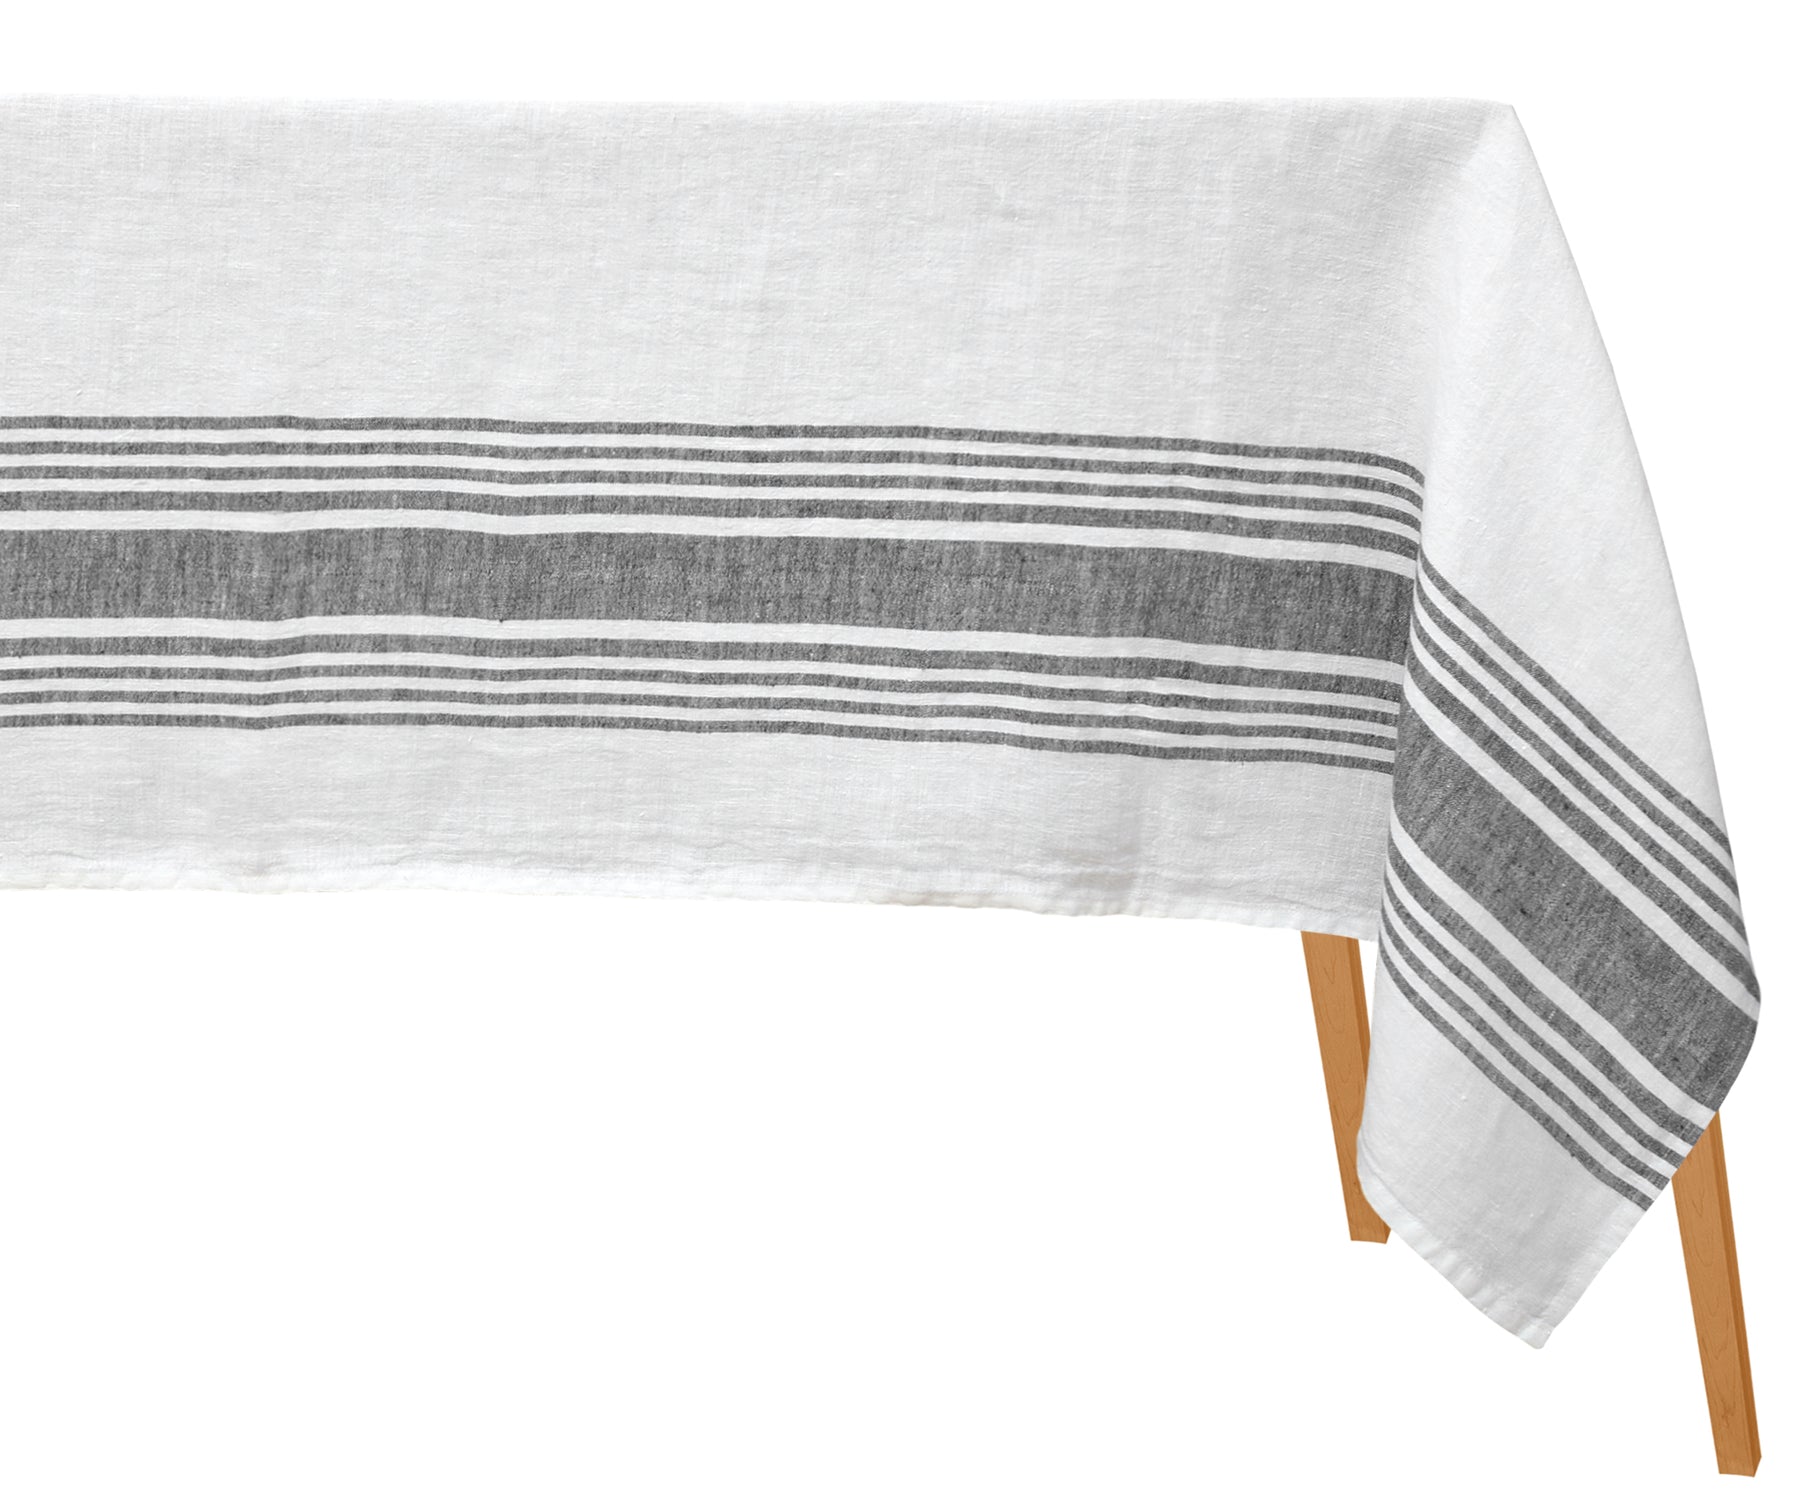 White linen tablecloth featuring a minimalist striped design